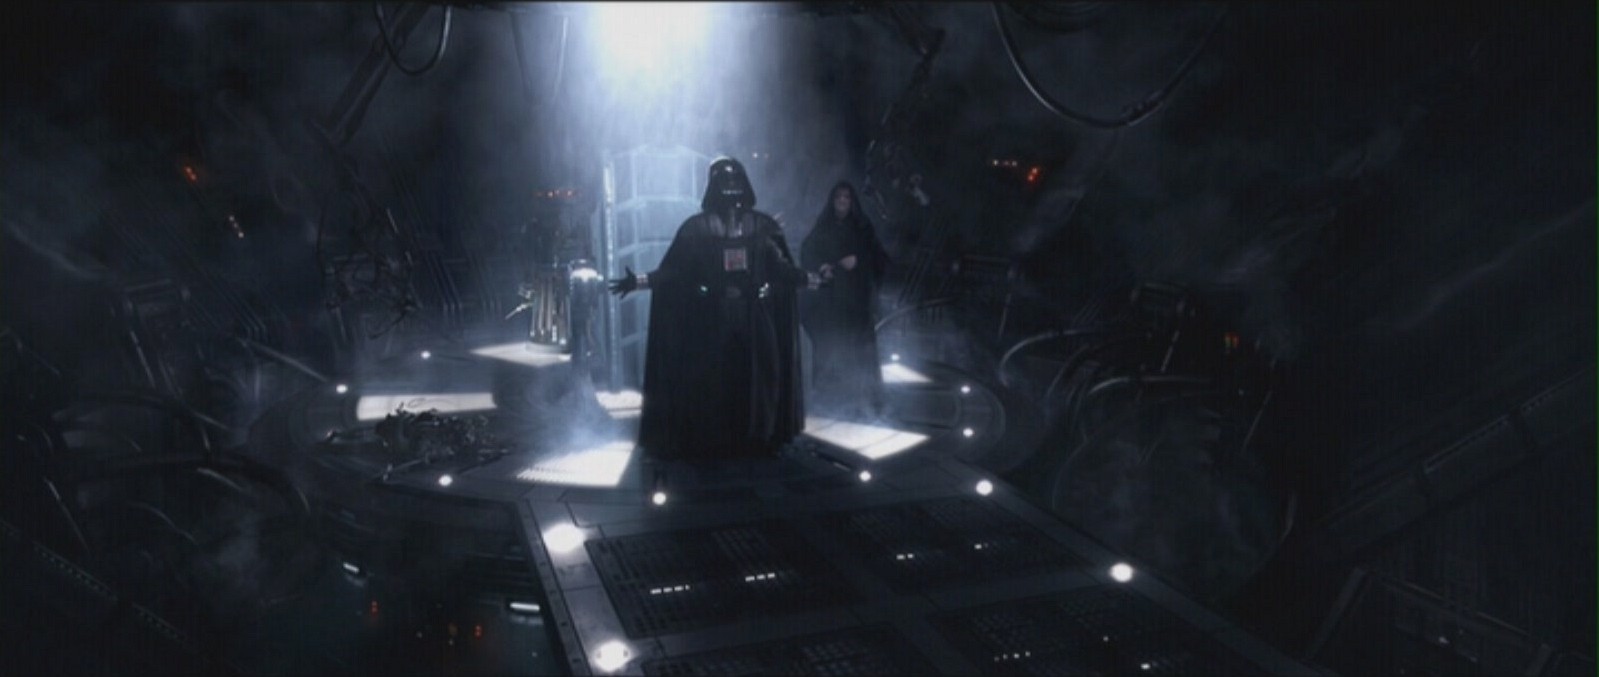 Star-Wars-Episode-III-Revenge-Of-The-Sith-Darth-Vader-darth-vader-18356807-1599-677.jpg